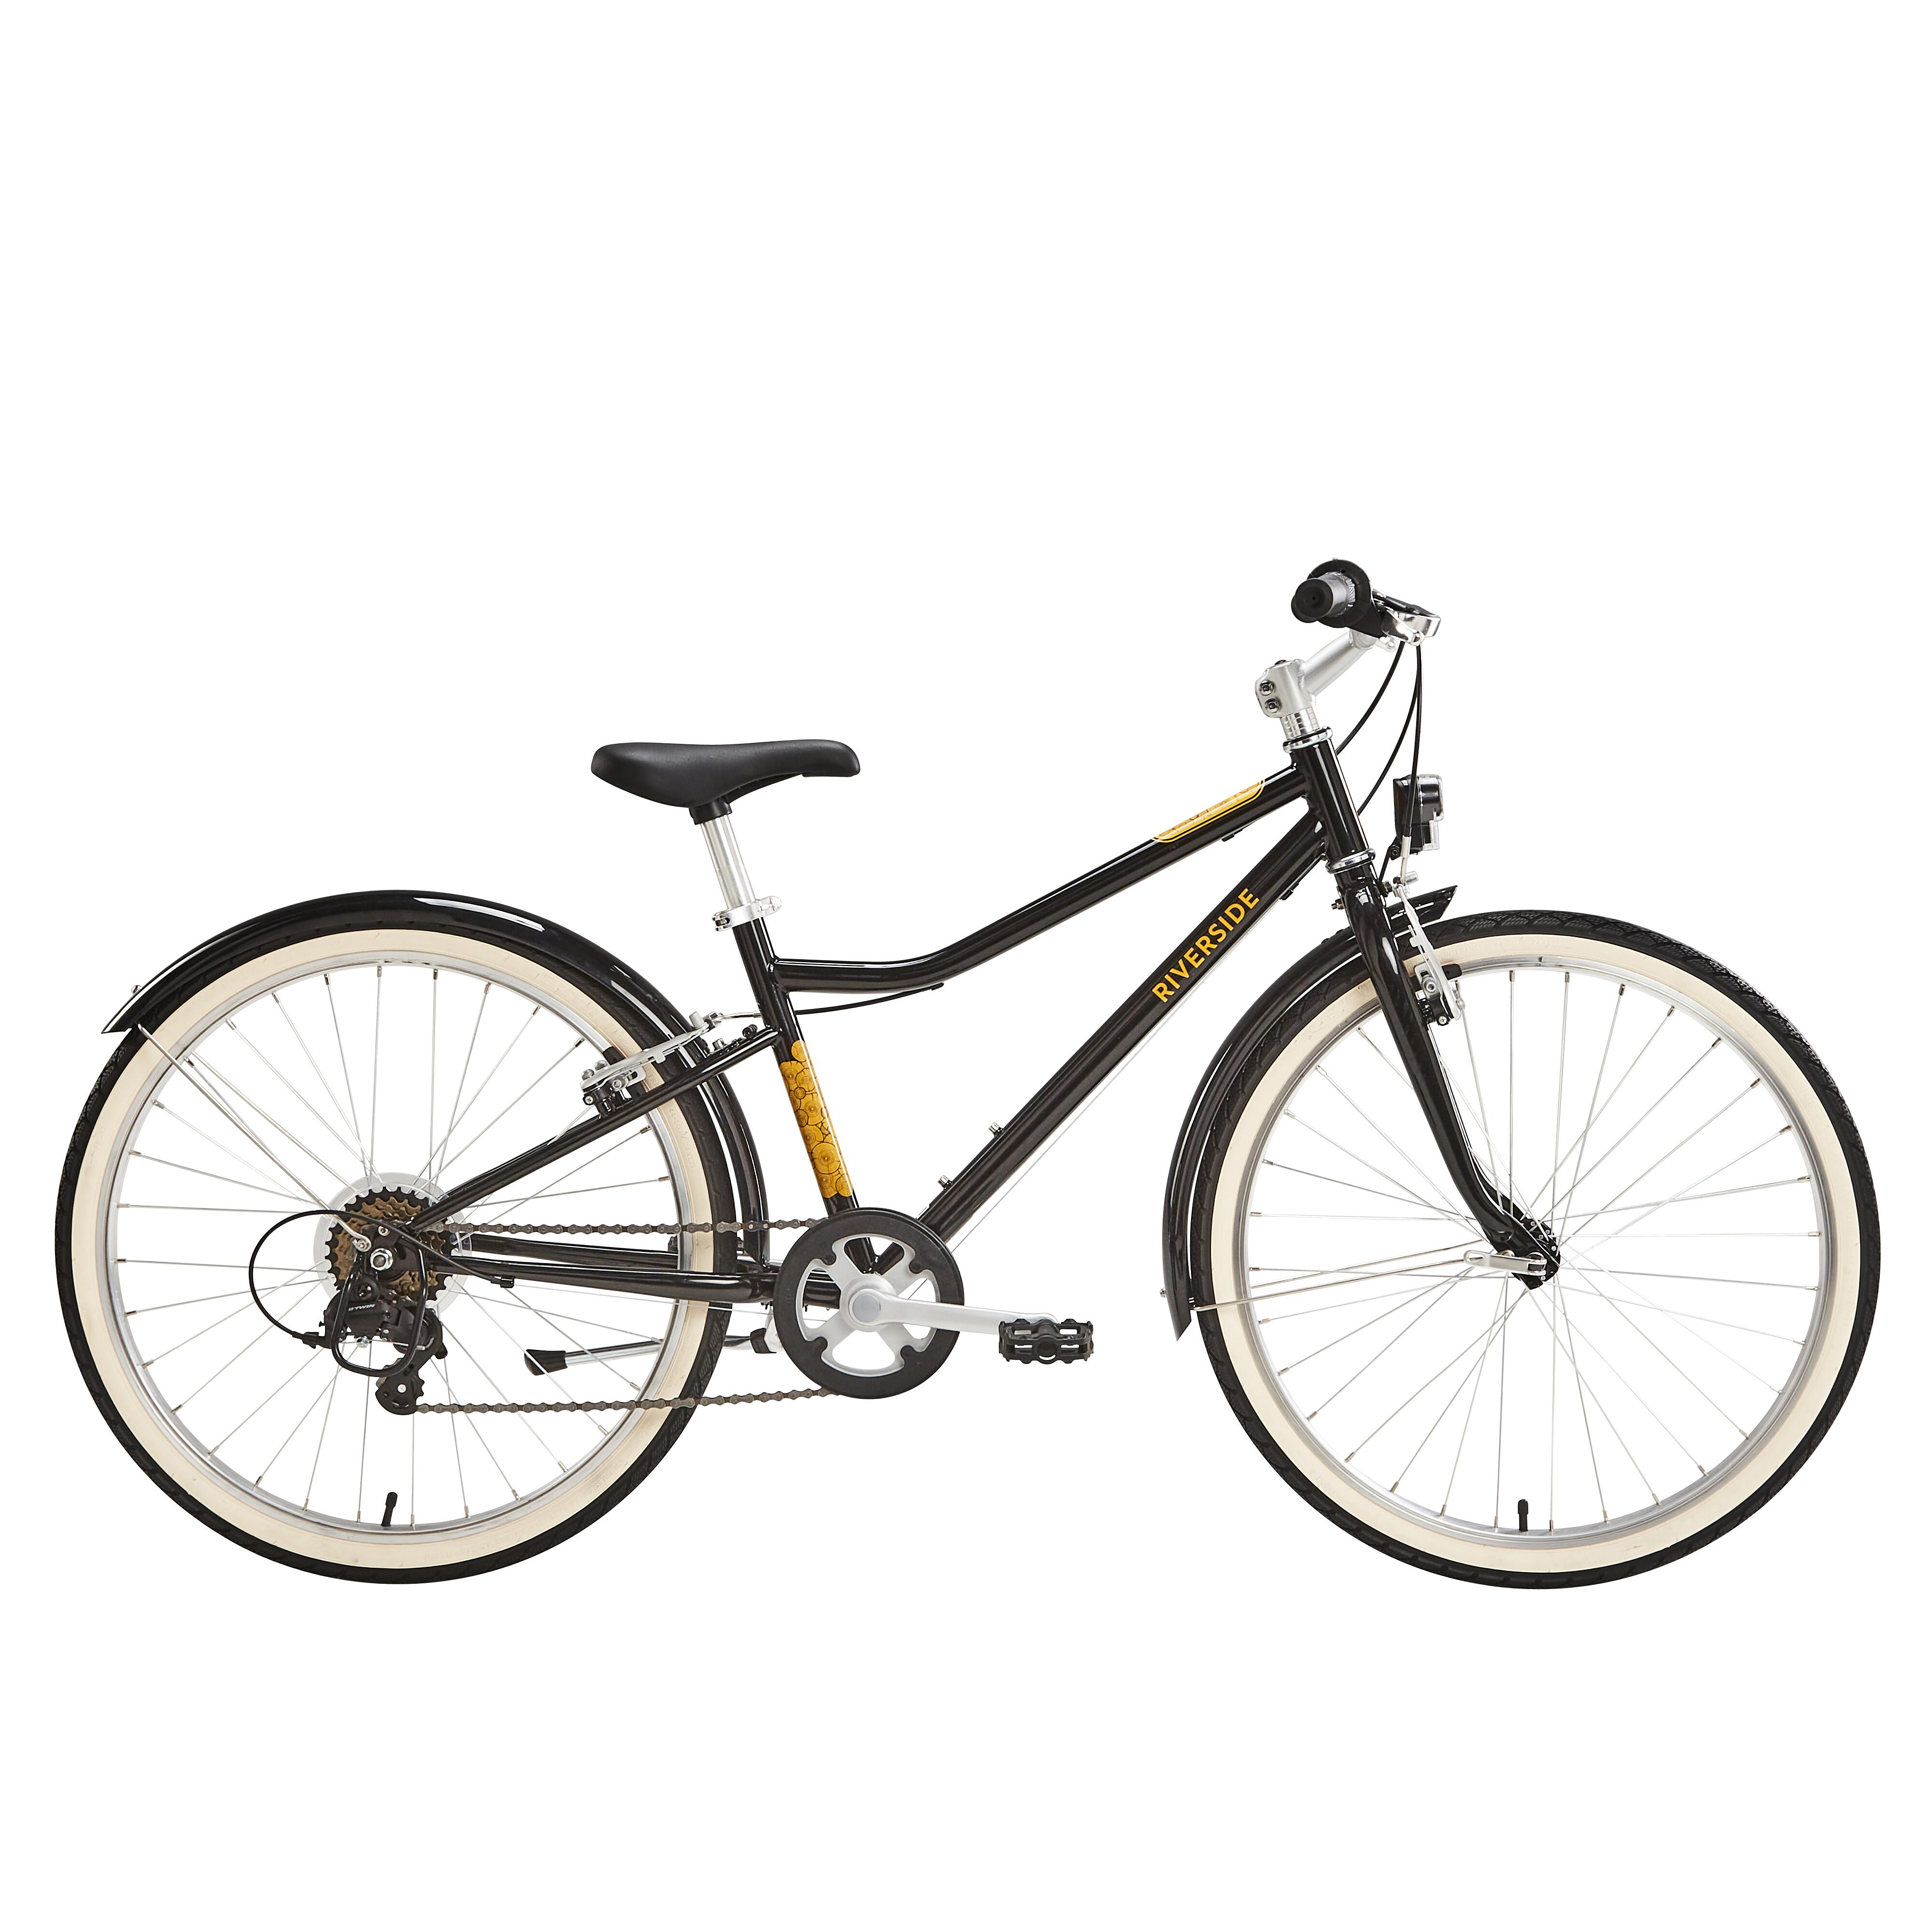 Bicicletă polivalentă Riverside 500 24 inch Negru-Galben Copii 9-12 ani 500